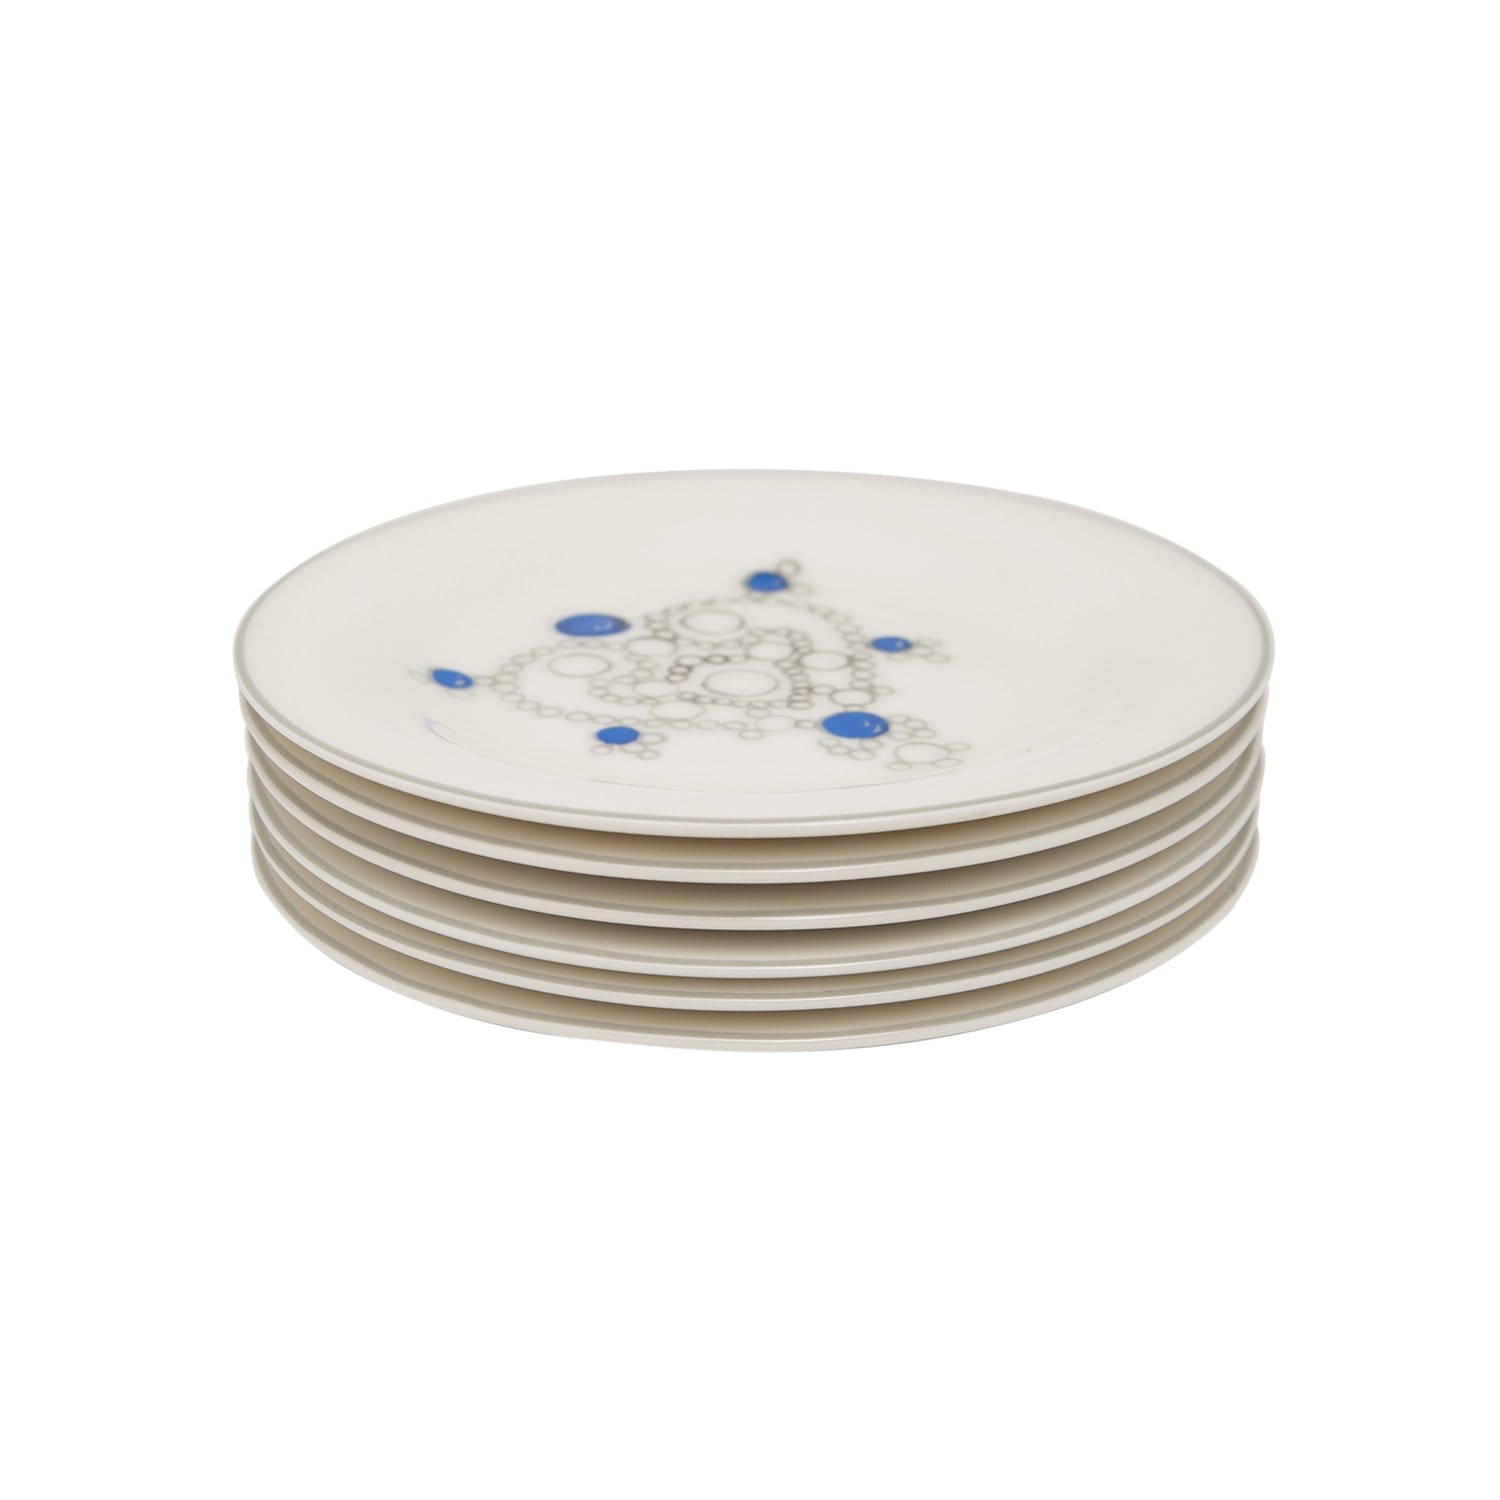 L'atelier FB Sapphire Coupe Shape Round Cookies Plate Set - 16 cm, 6 Pieces - TC 4716 013 - Jashanmal Home